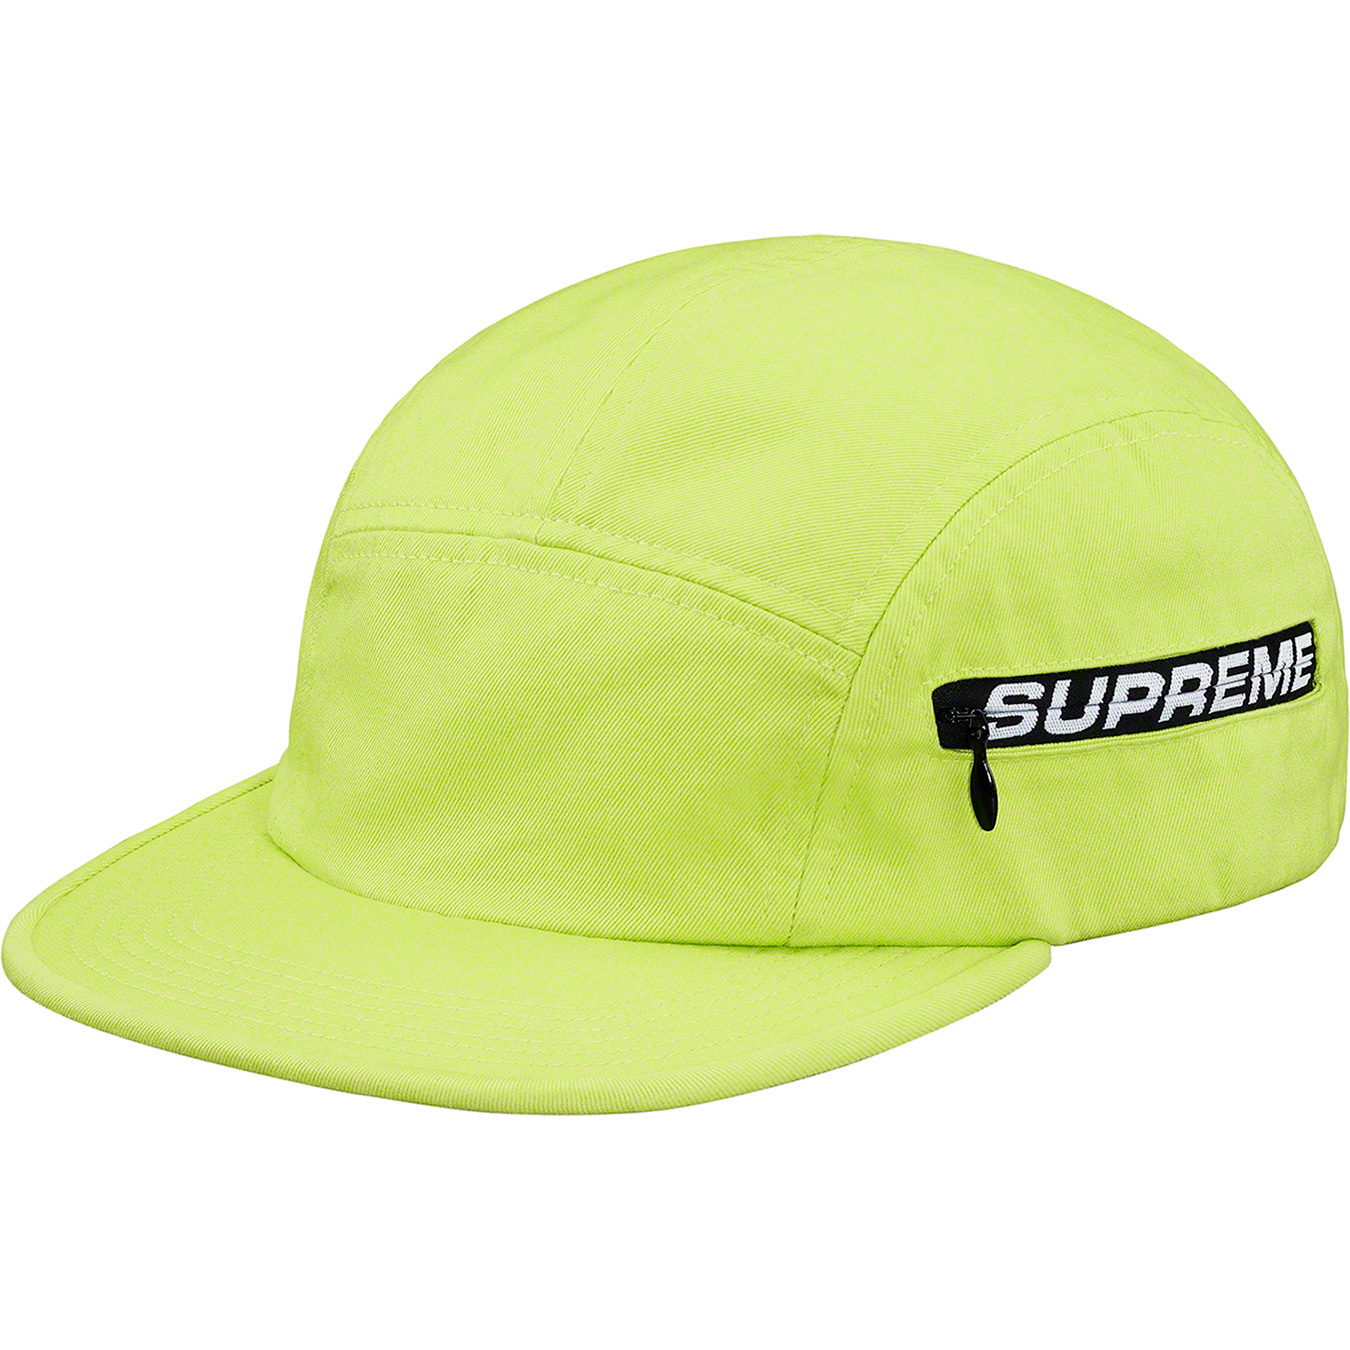 Supreme Side Zip Camp Cap